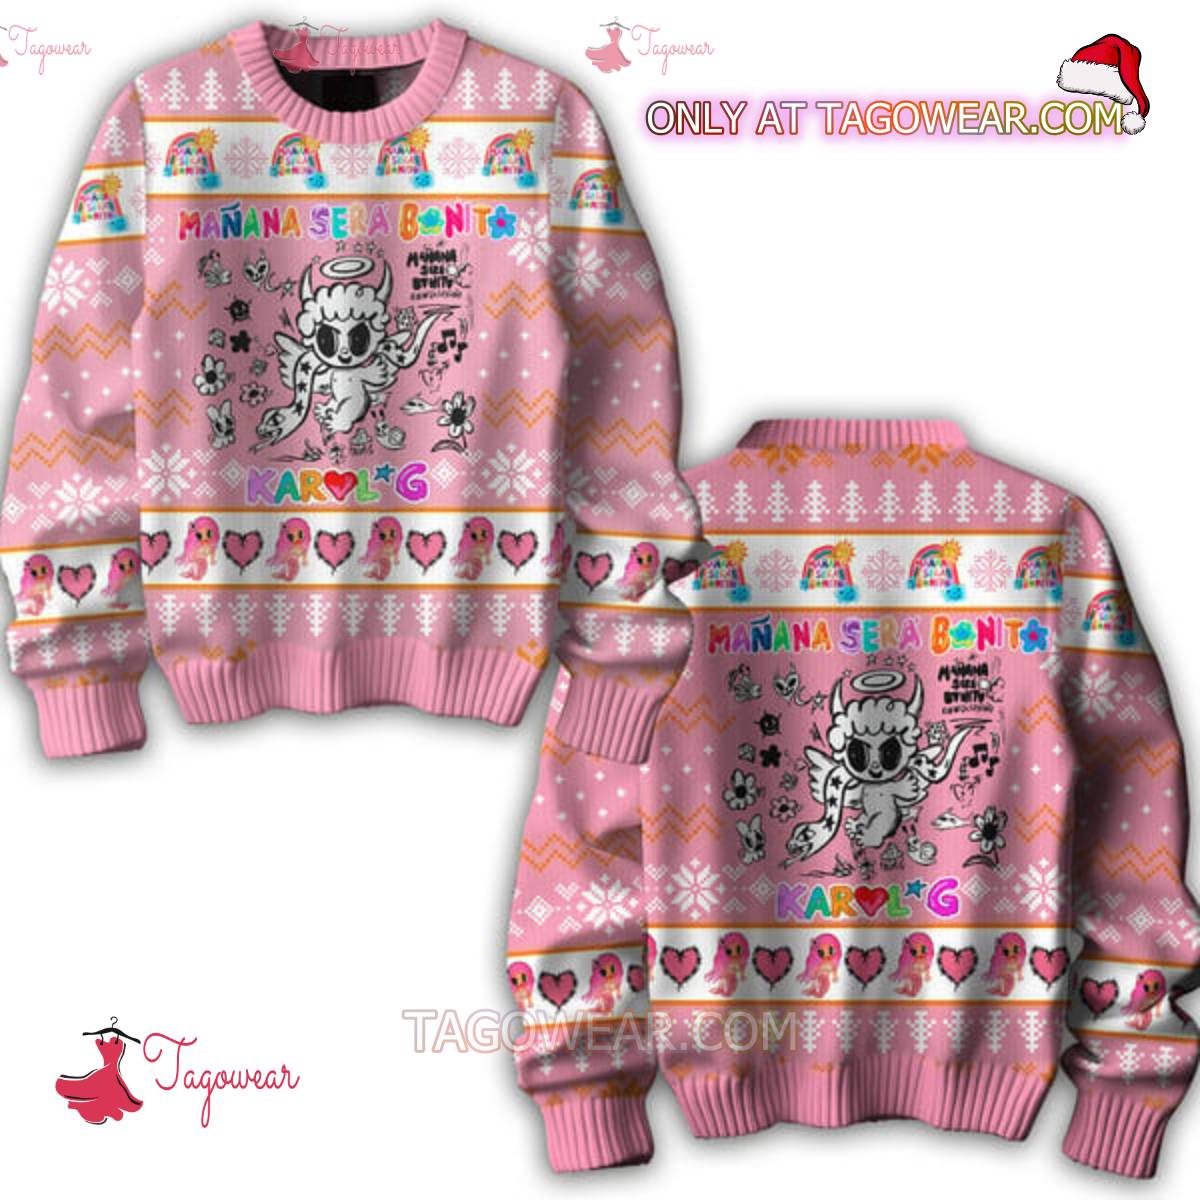 Manana Sera Bonito Karol G Christmas Sweater